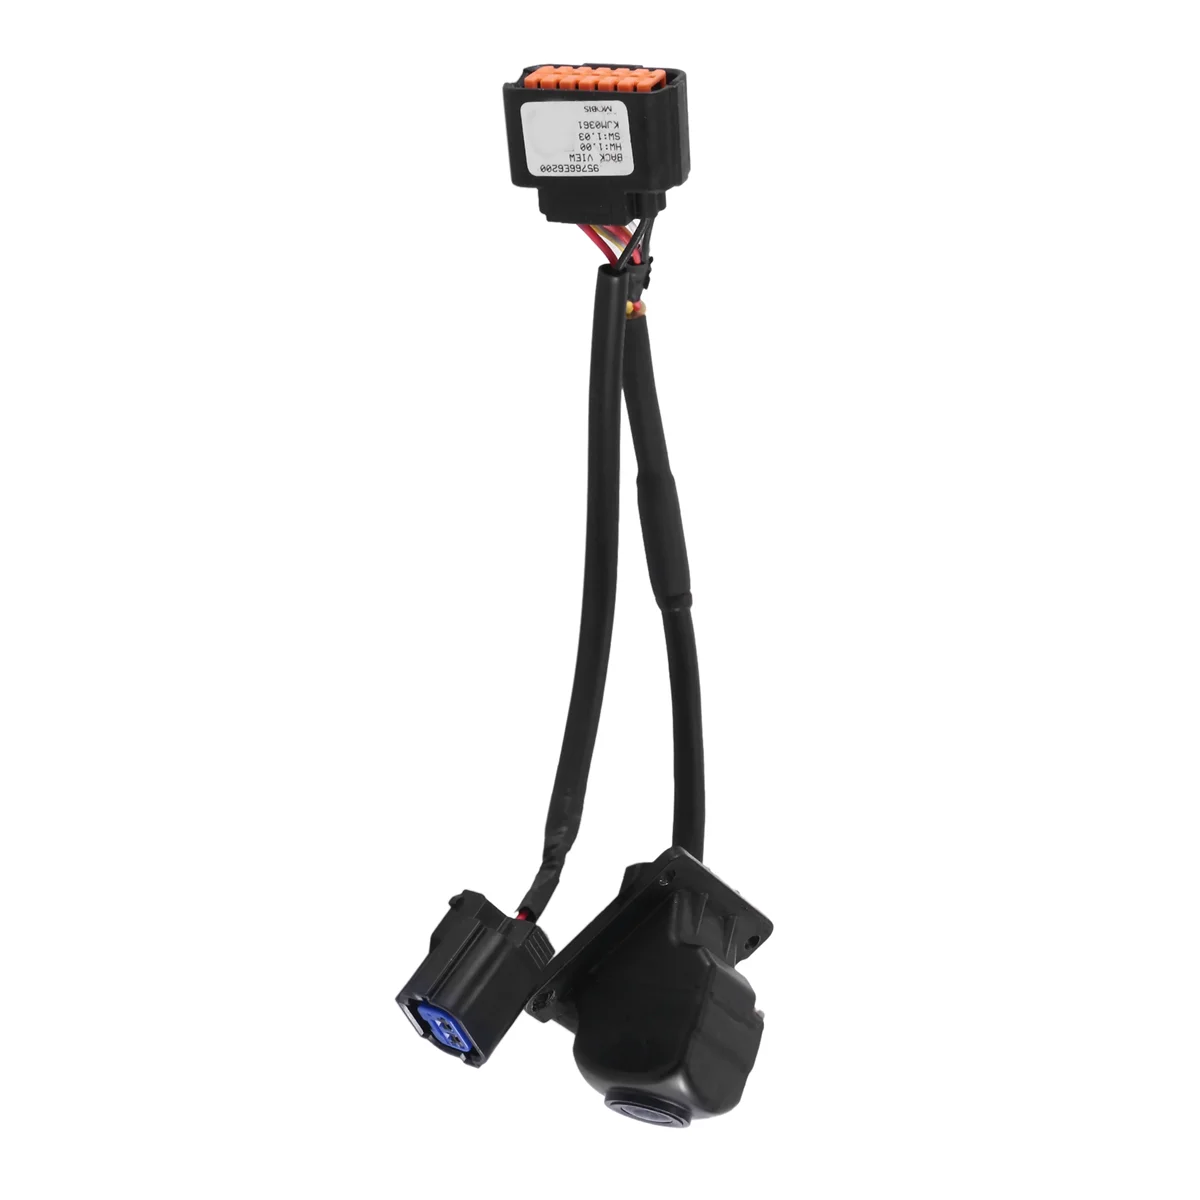 

95760E6201 Car Rear View Backup Camera Parking ist Camera for HYUNDAI Santa 2015-2017 95760-E6201